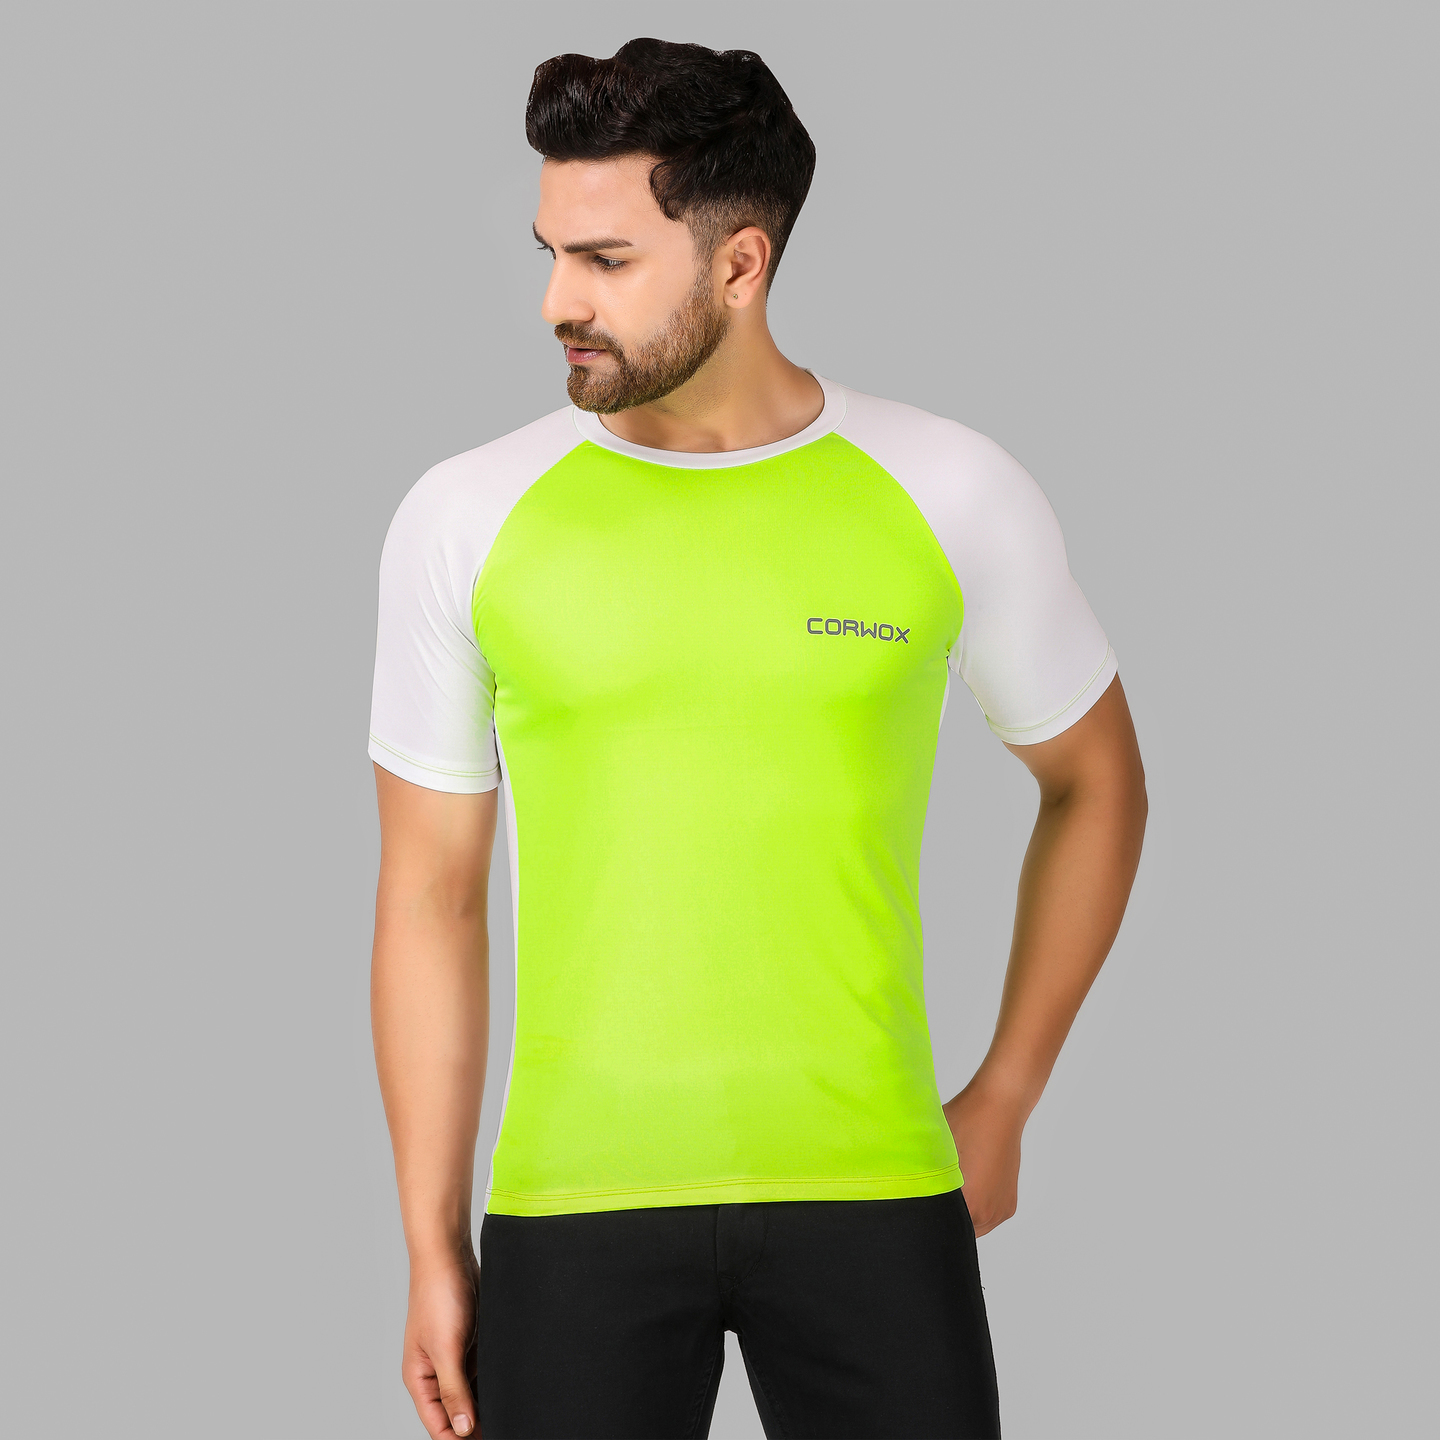 CORWOX Mens Neon Green & White Sports T-Shirt